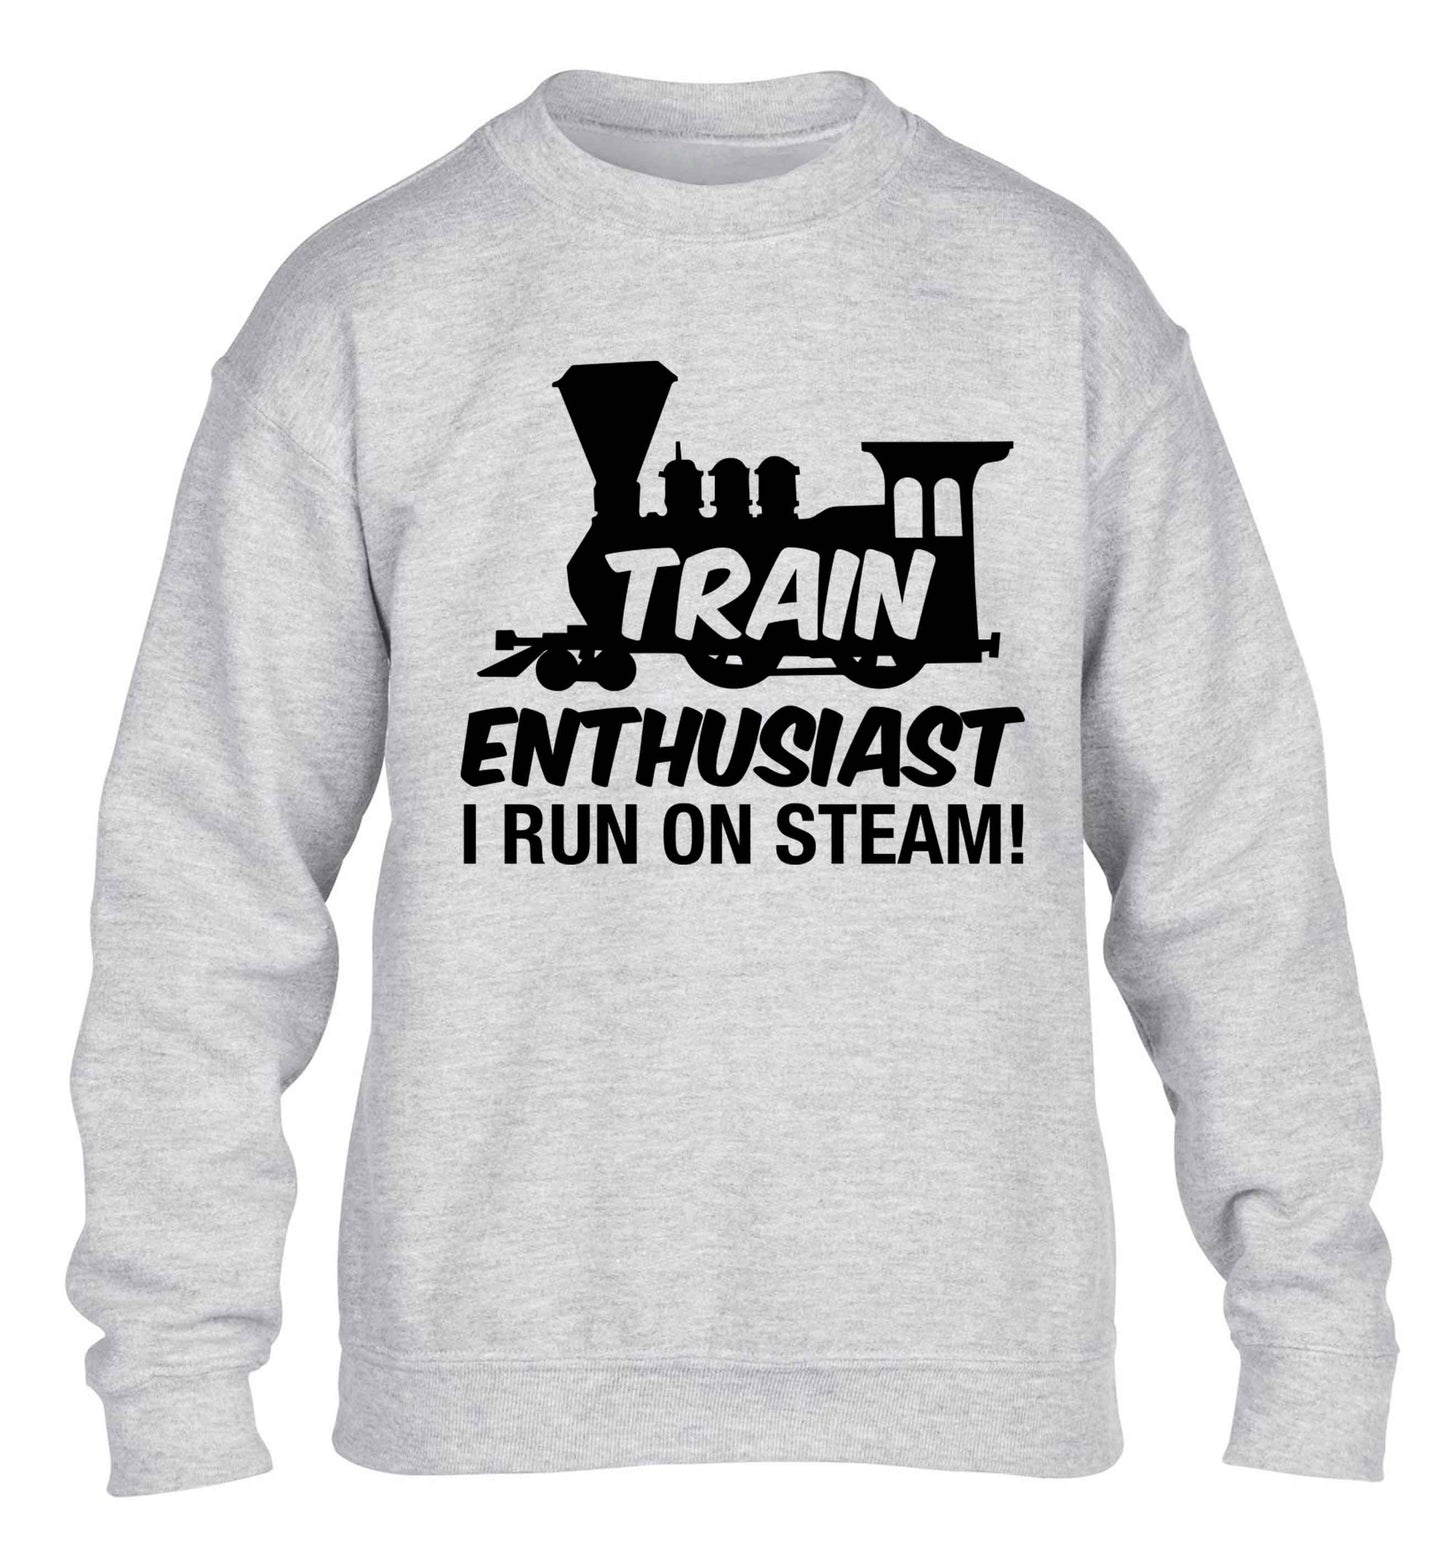 Train enthusiast I run on steam children's grey sweater 12-13 Years